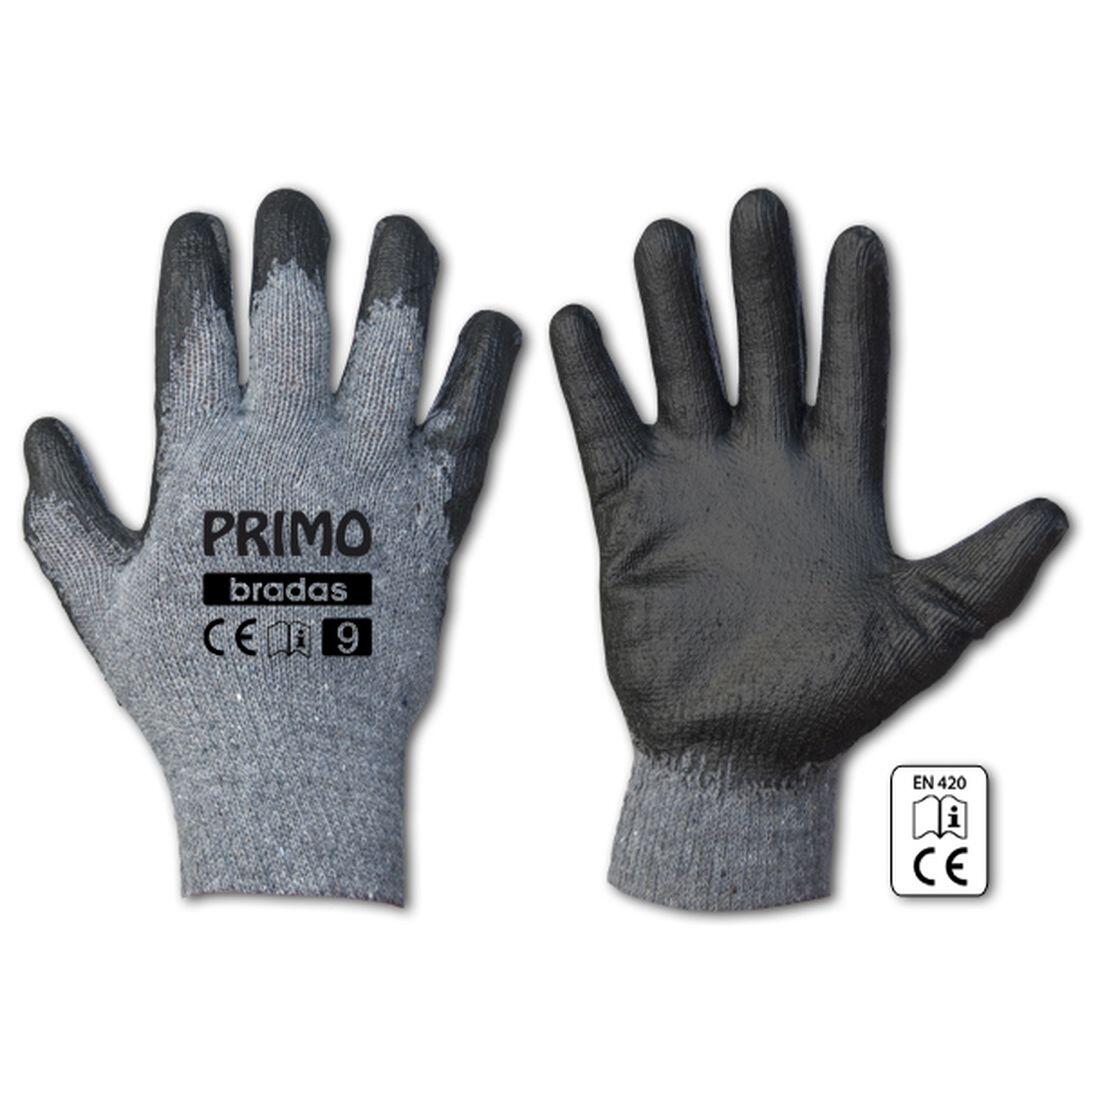 rukavice PRIMO latex 11